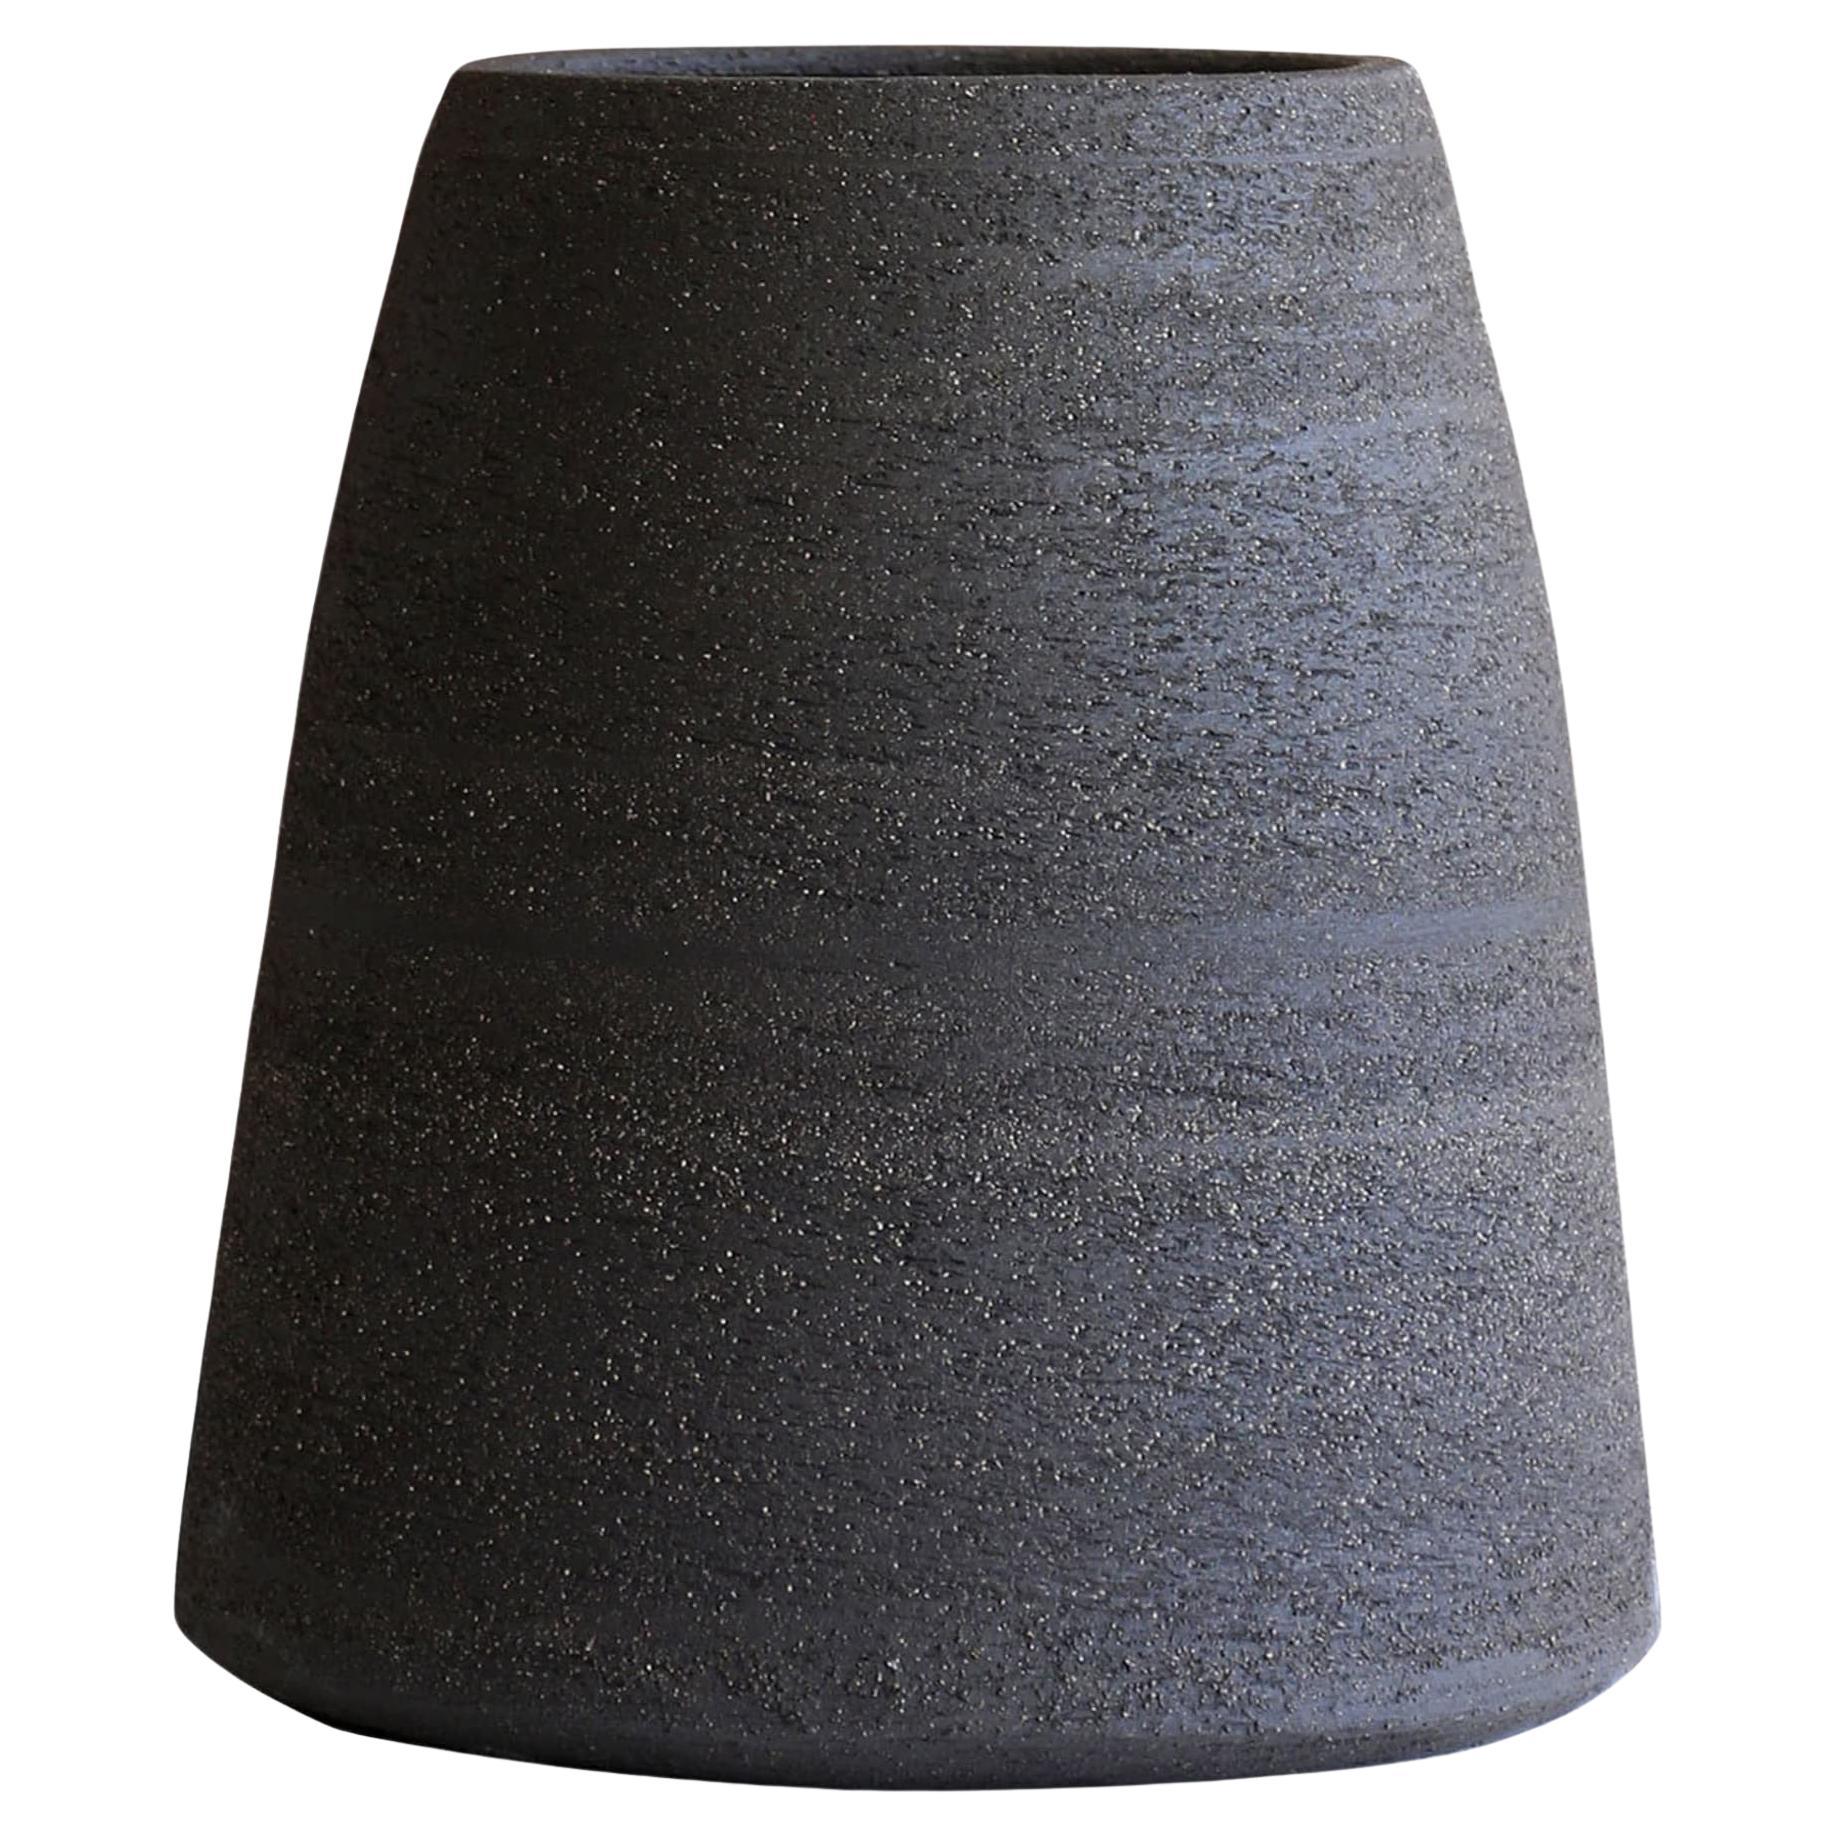 Tapered Carbon-Black Decorative Vase